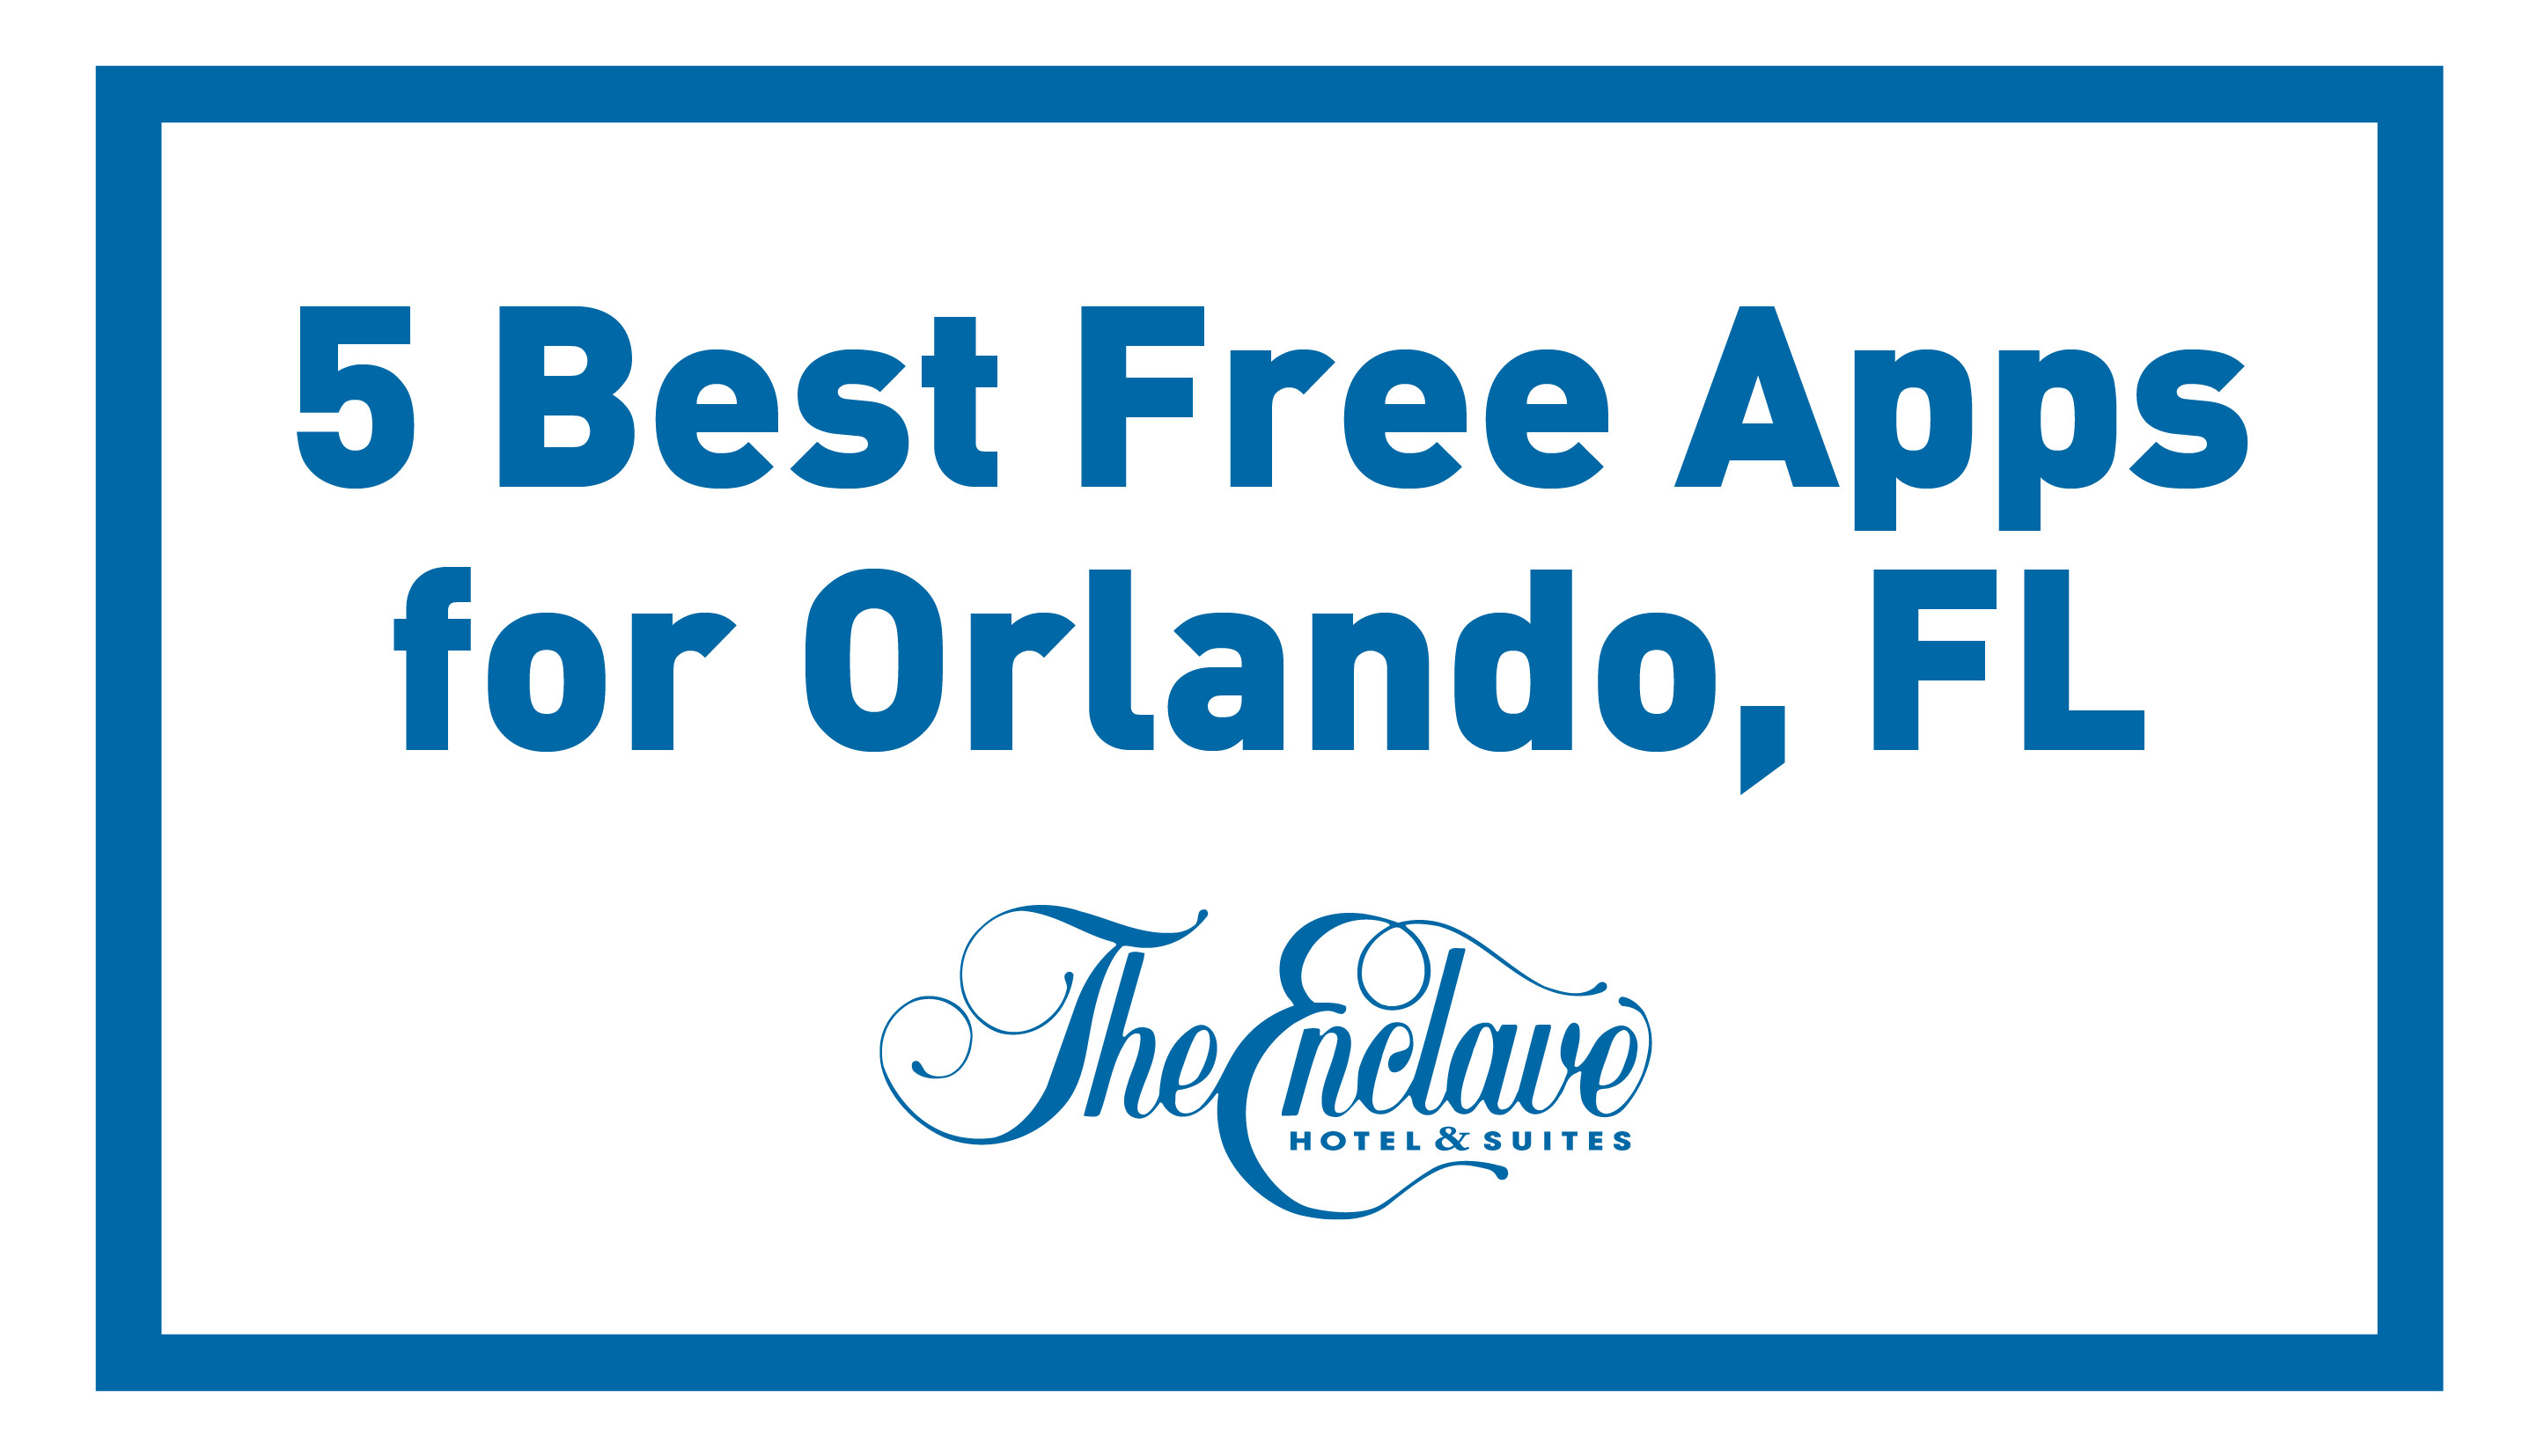 5 Best Free Apps for Orlando, FL